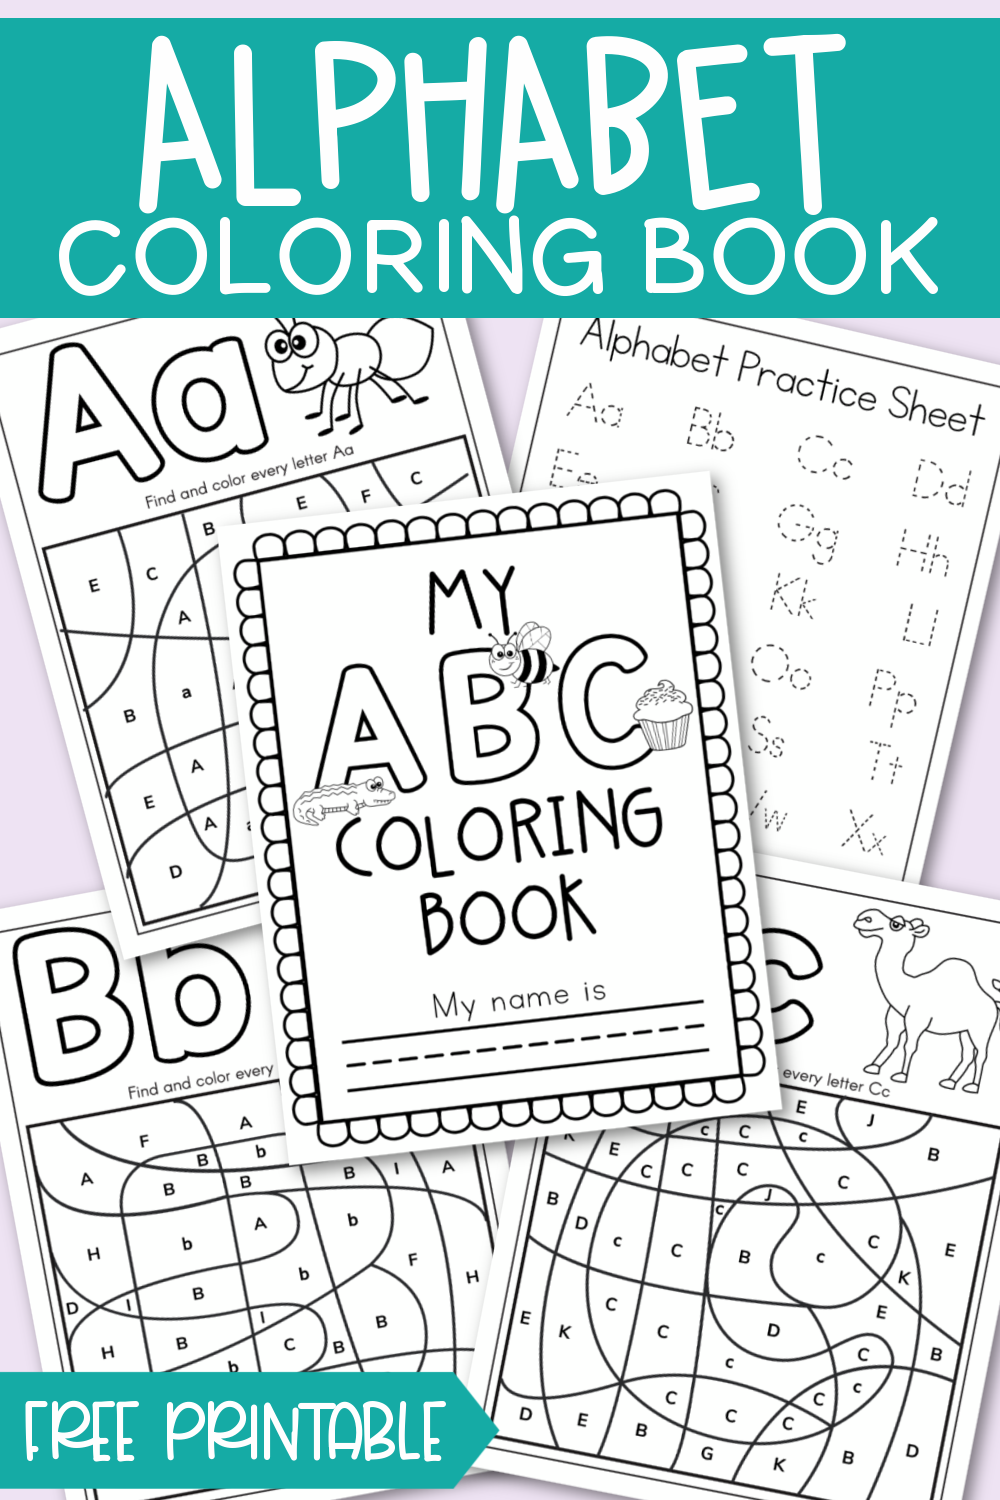 Free printable alphabet coloring book